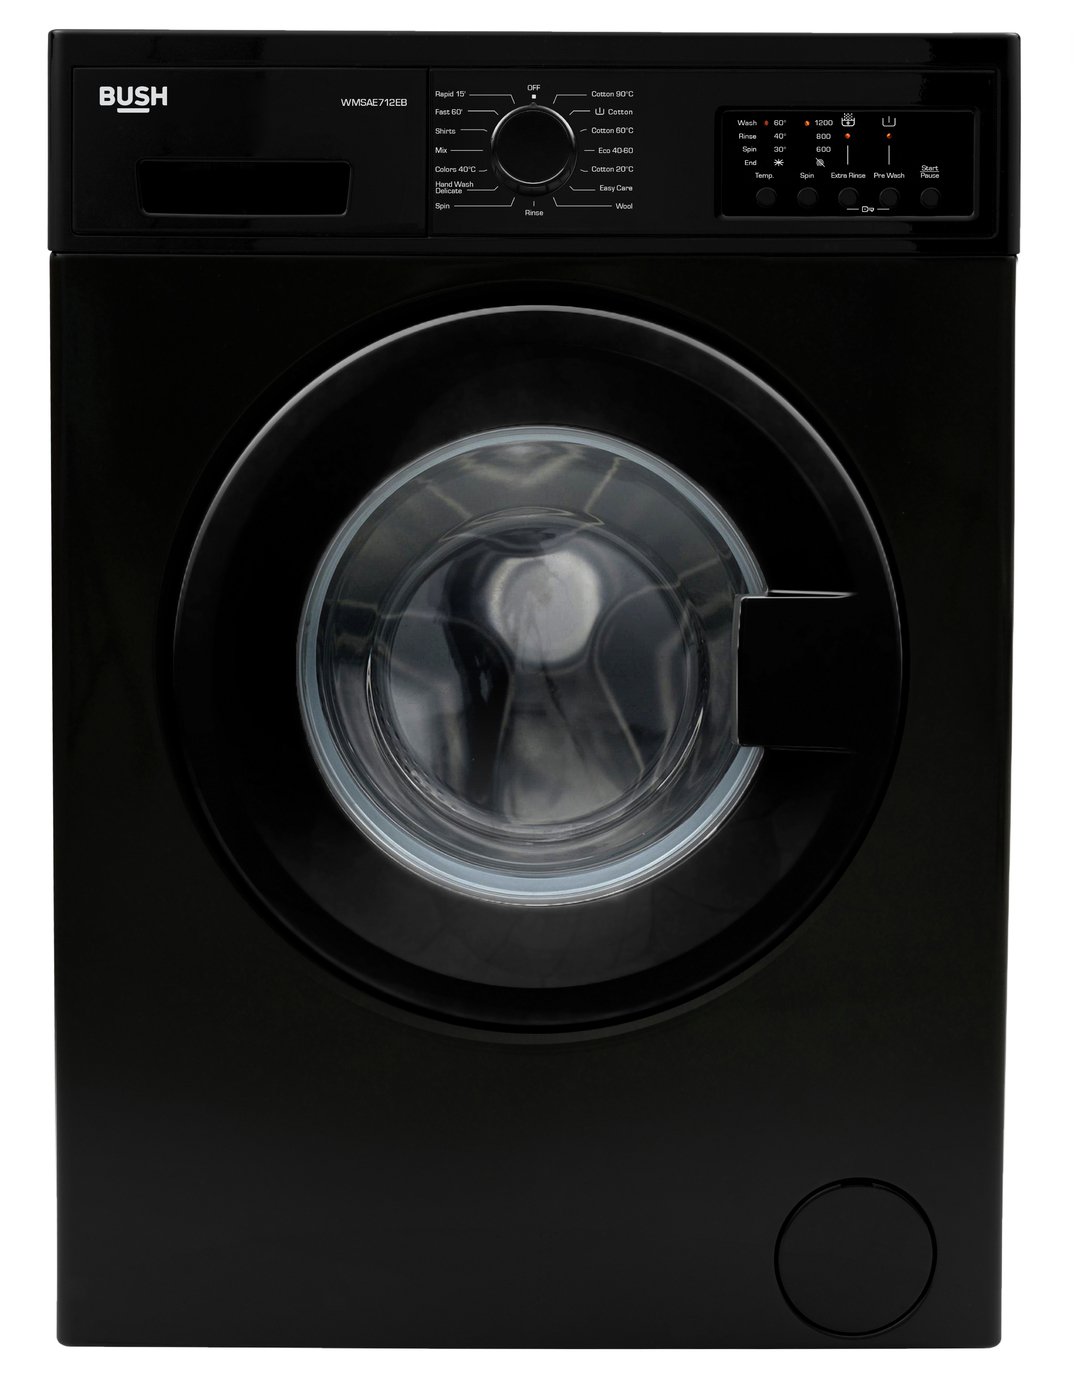 Bush WMSAE712EB 7KG 1200 Spin Washing Machine - Black